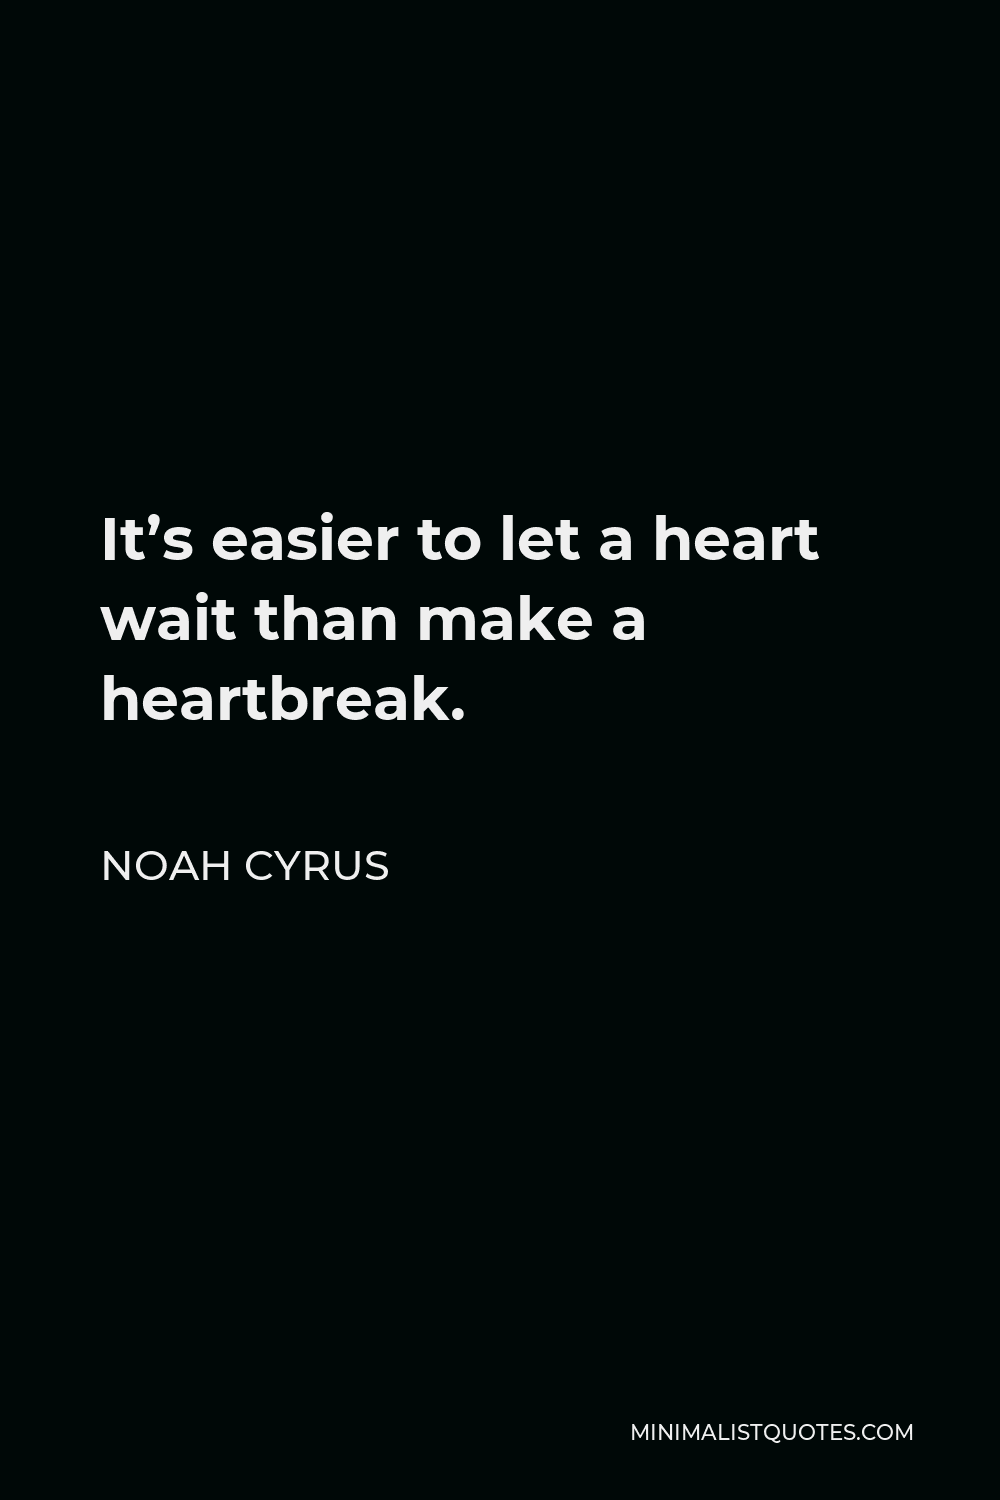 Noah Cyrus Quote - It’s easier to let a heart wait than make a heartbreak.